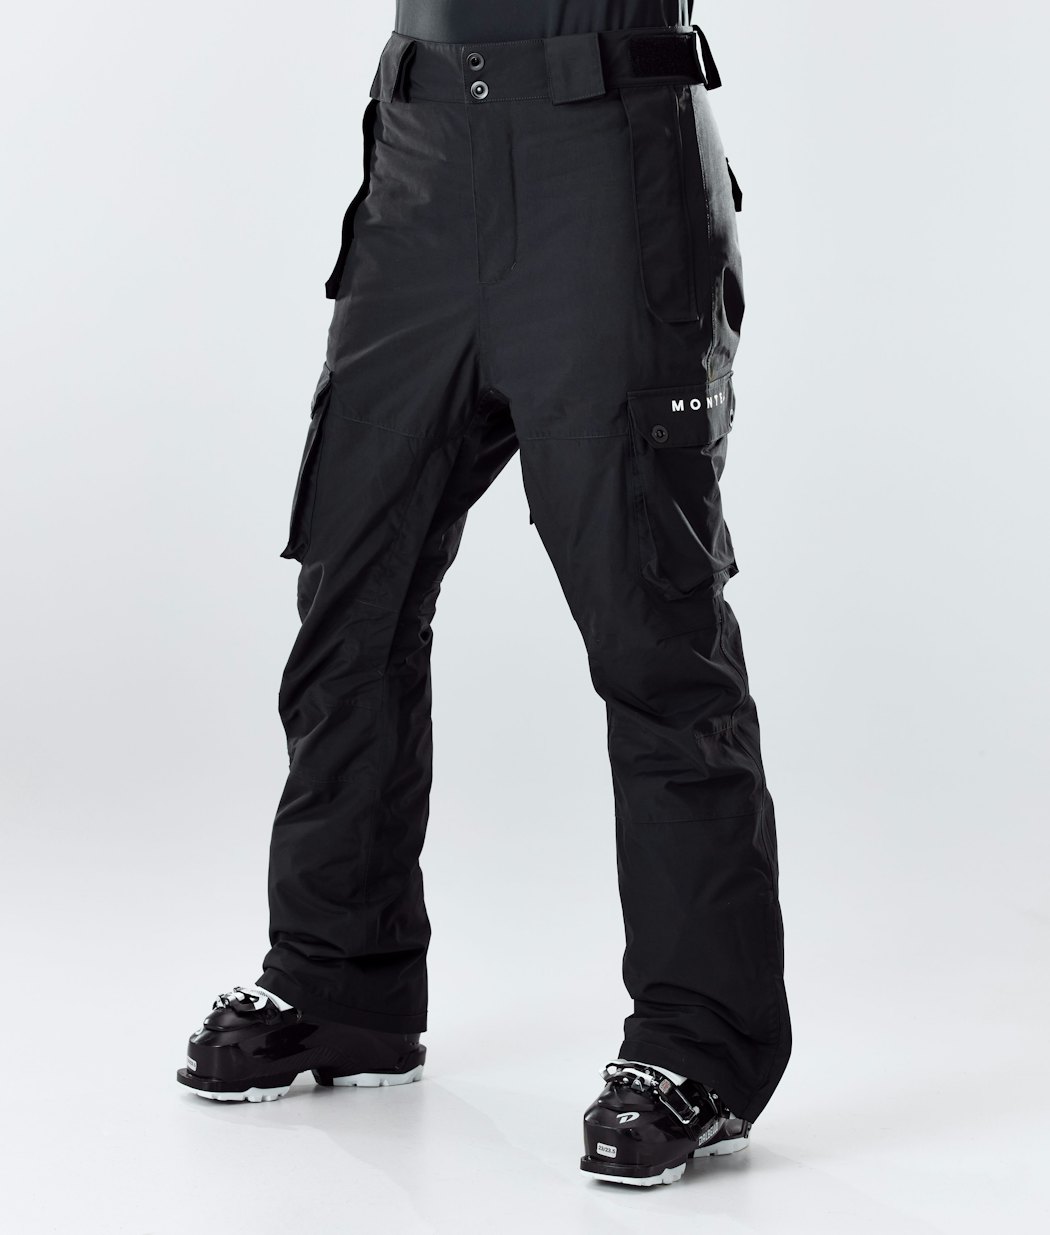 Montec Doom W 2020 Women's Ski Pants Black